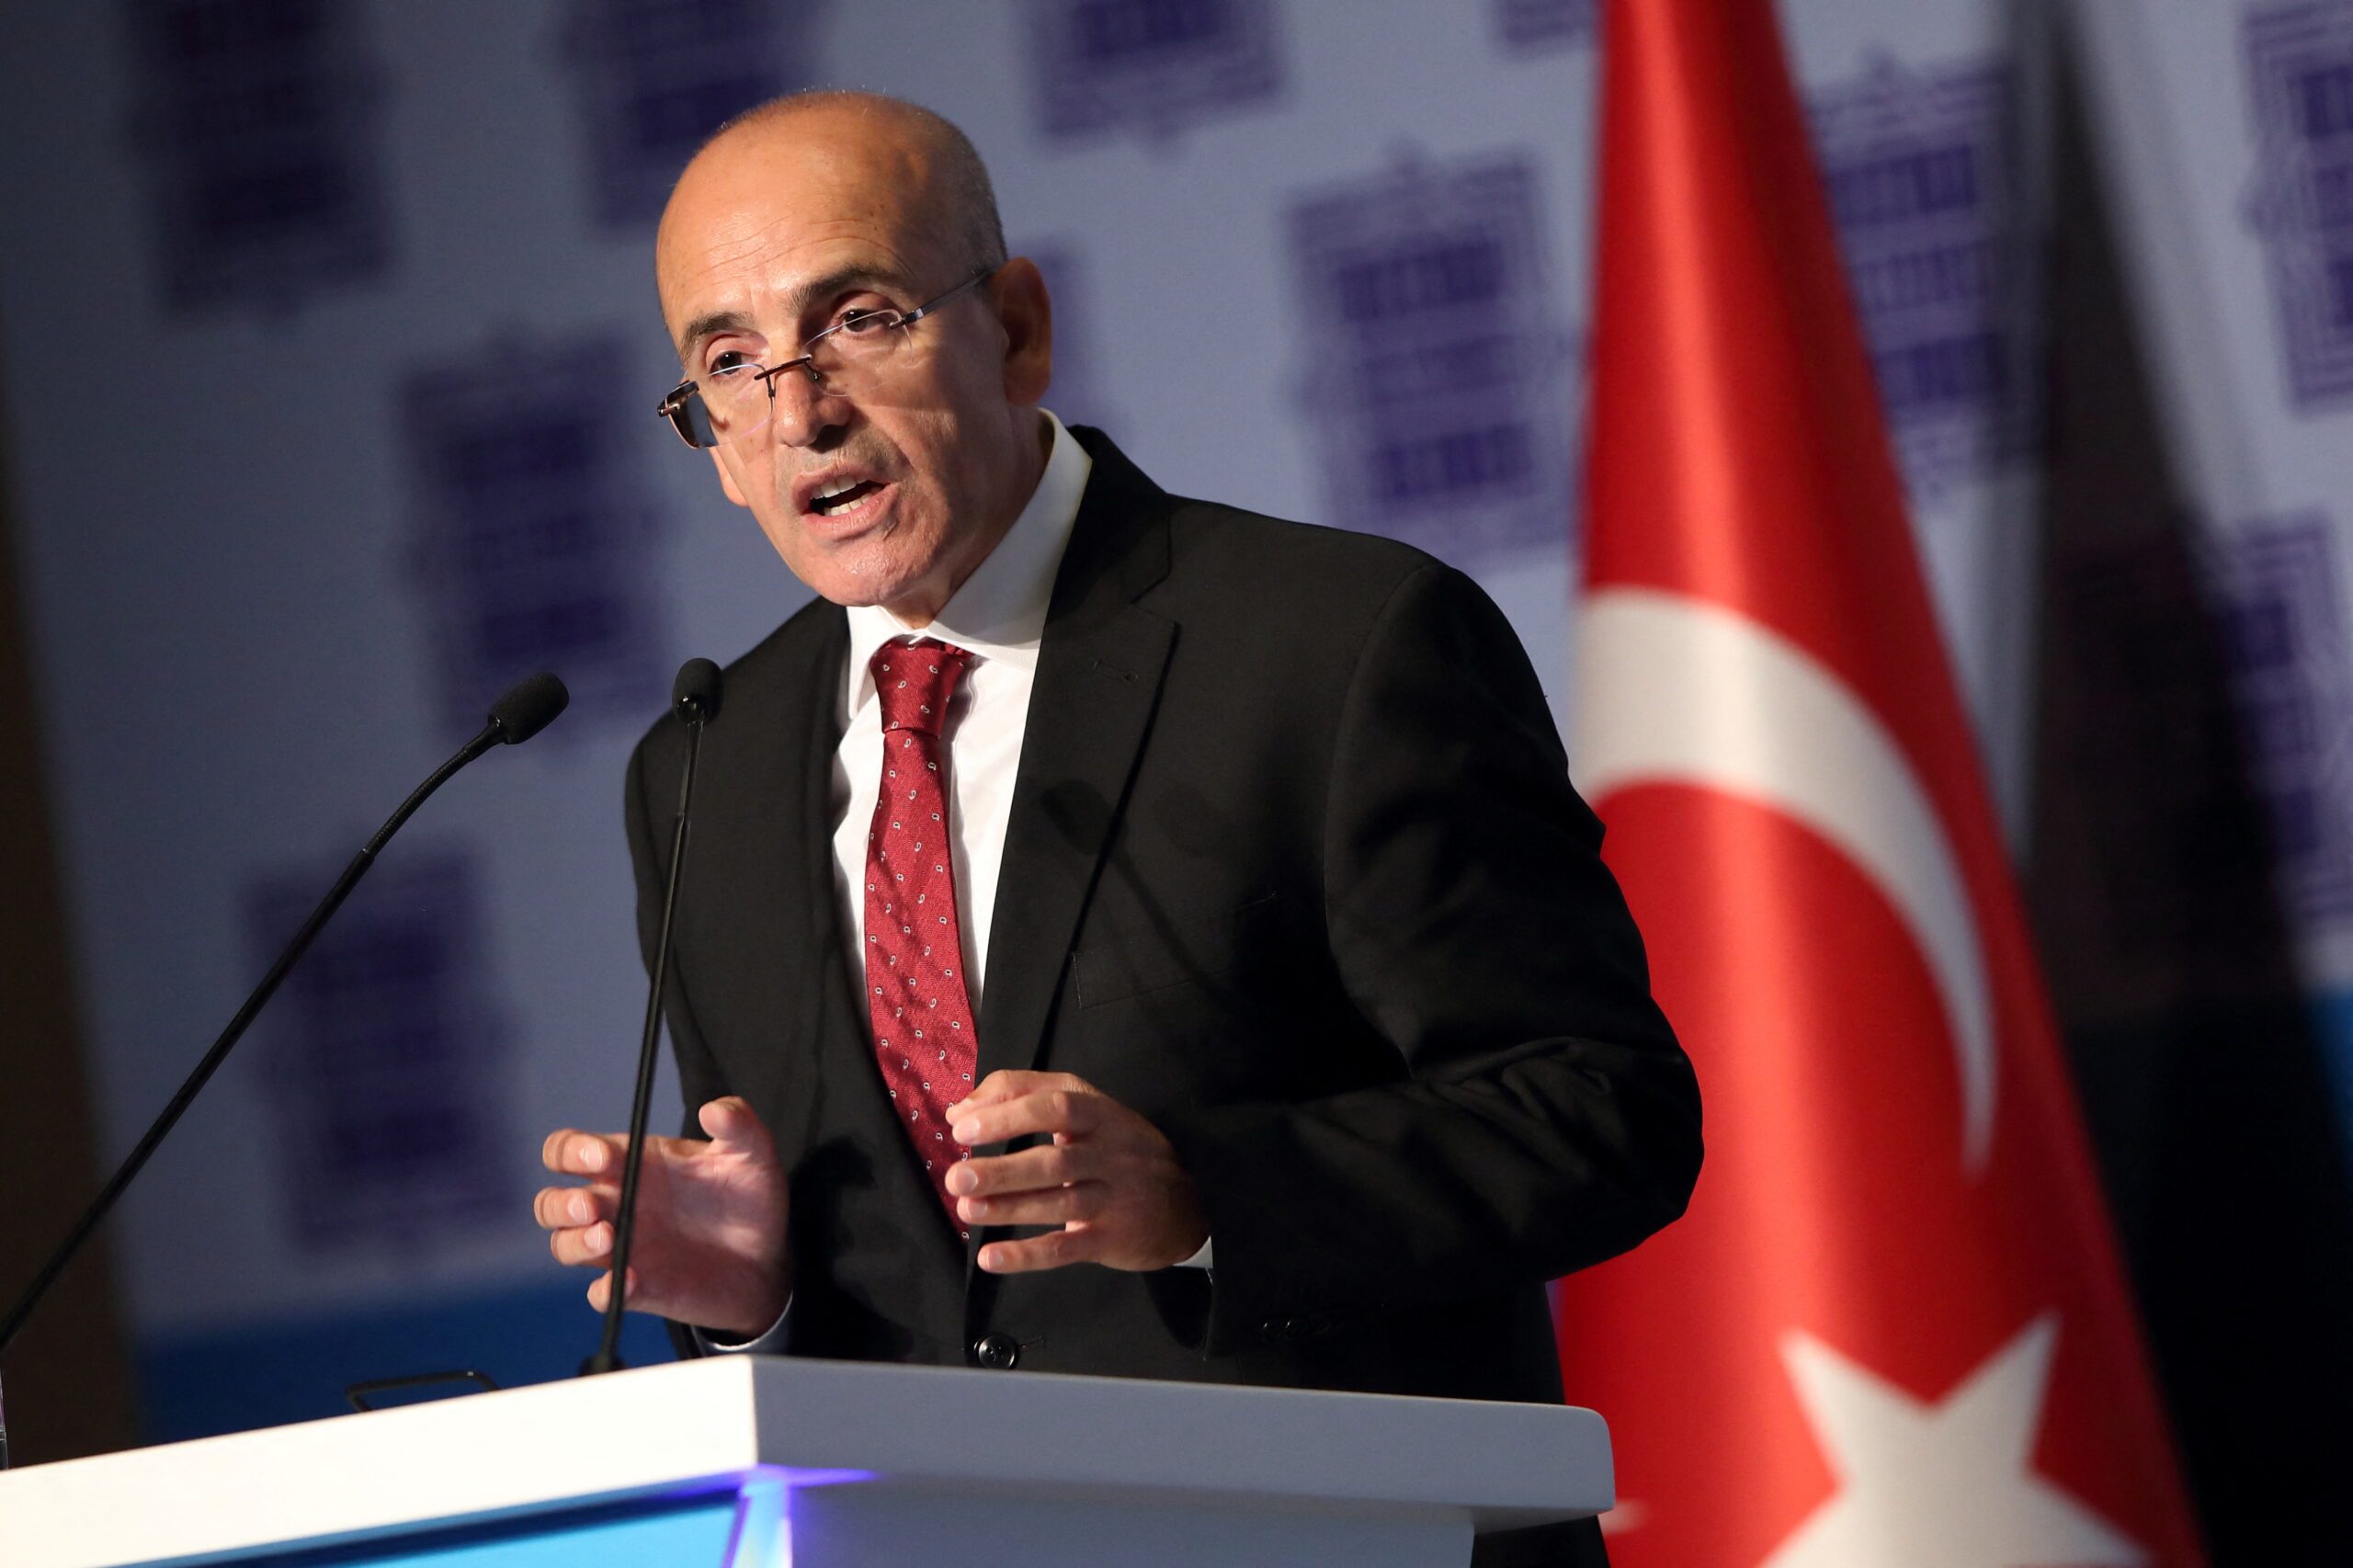 Turkey's finance minister Mehmet Simsek